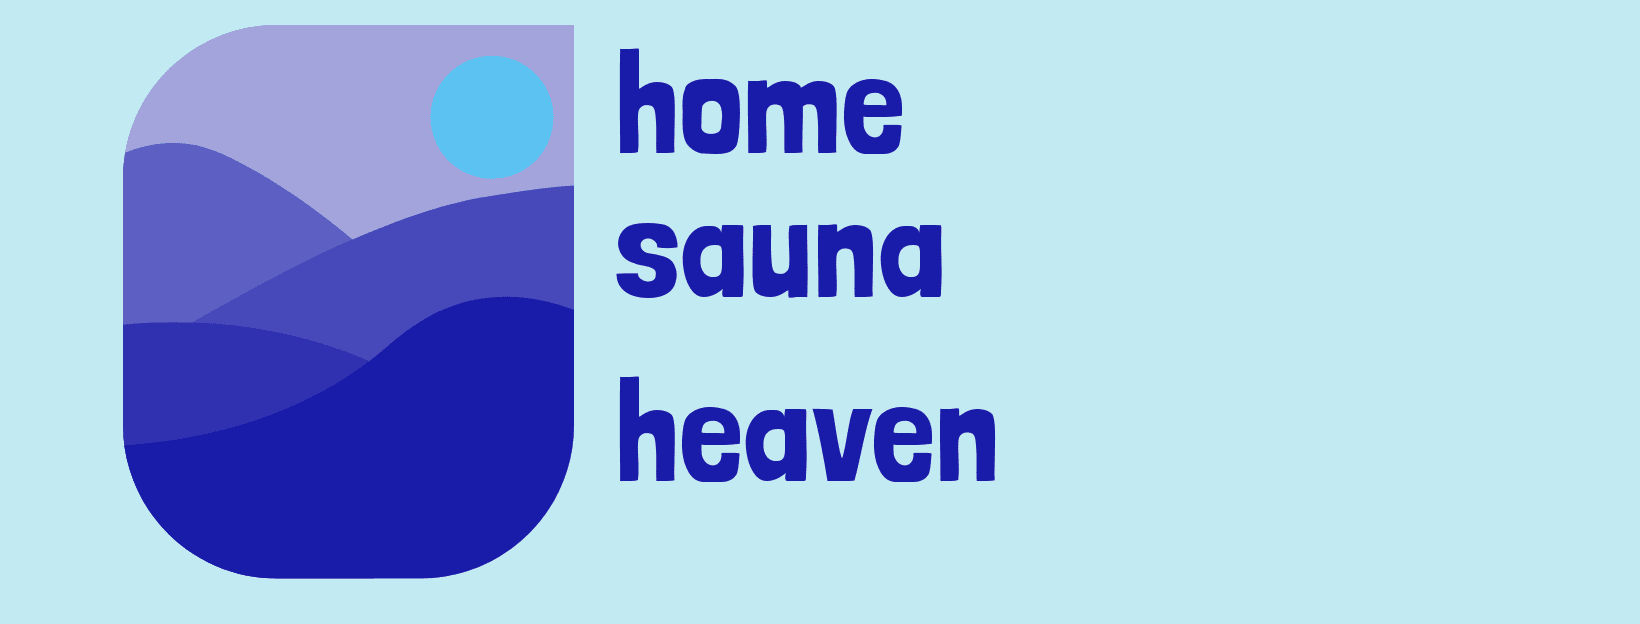 home sauna heaven logo